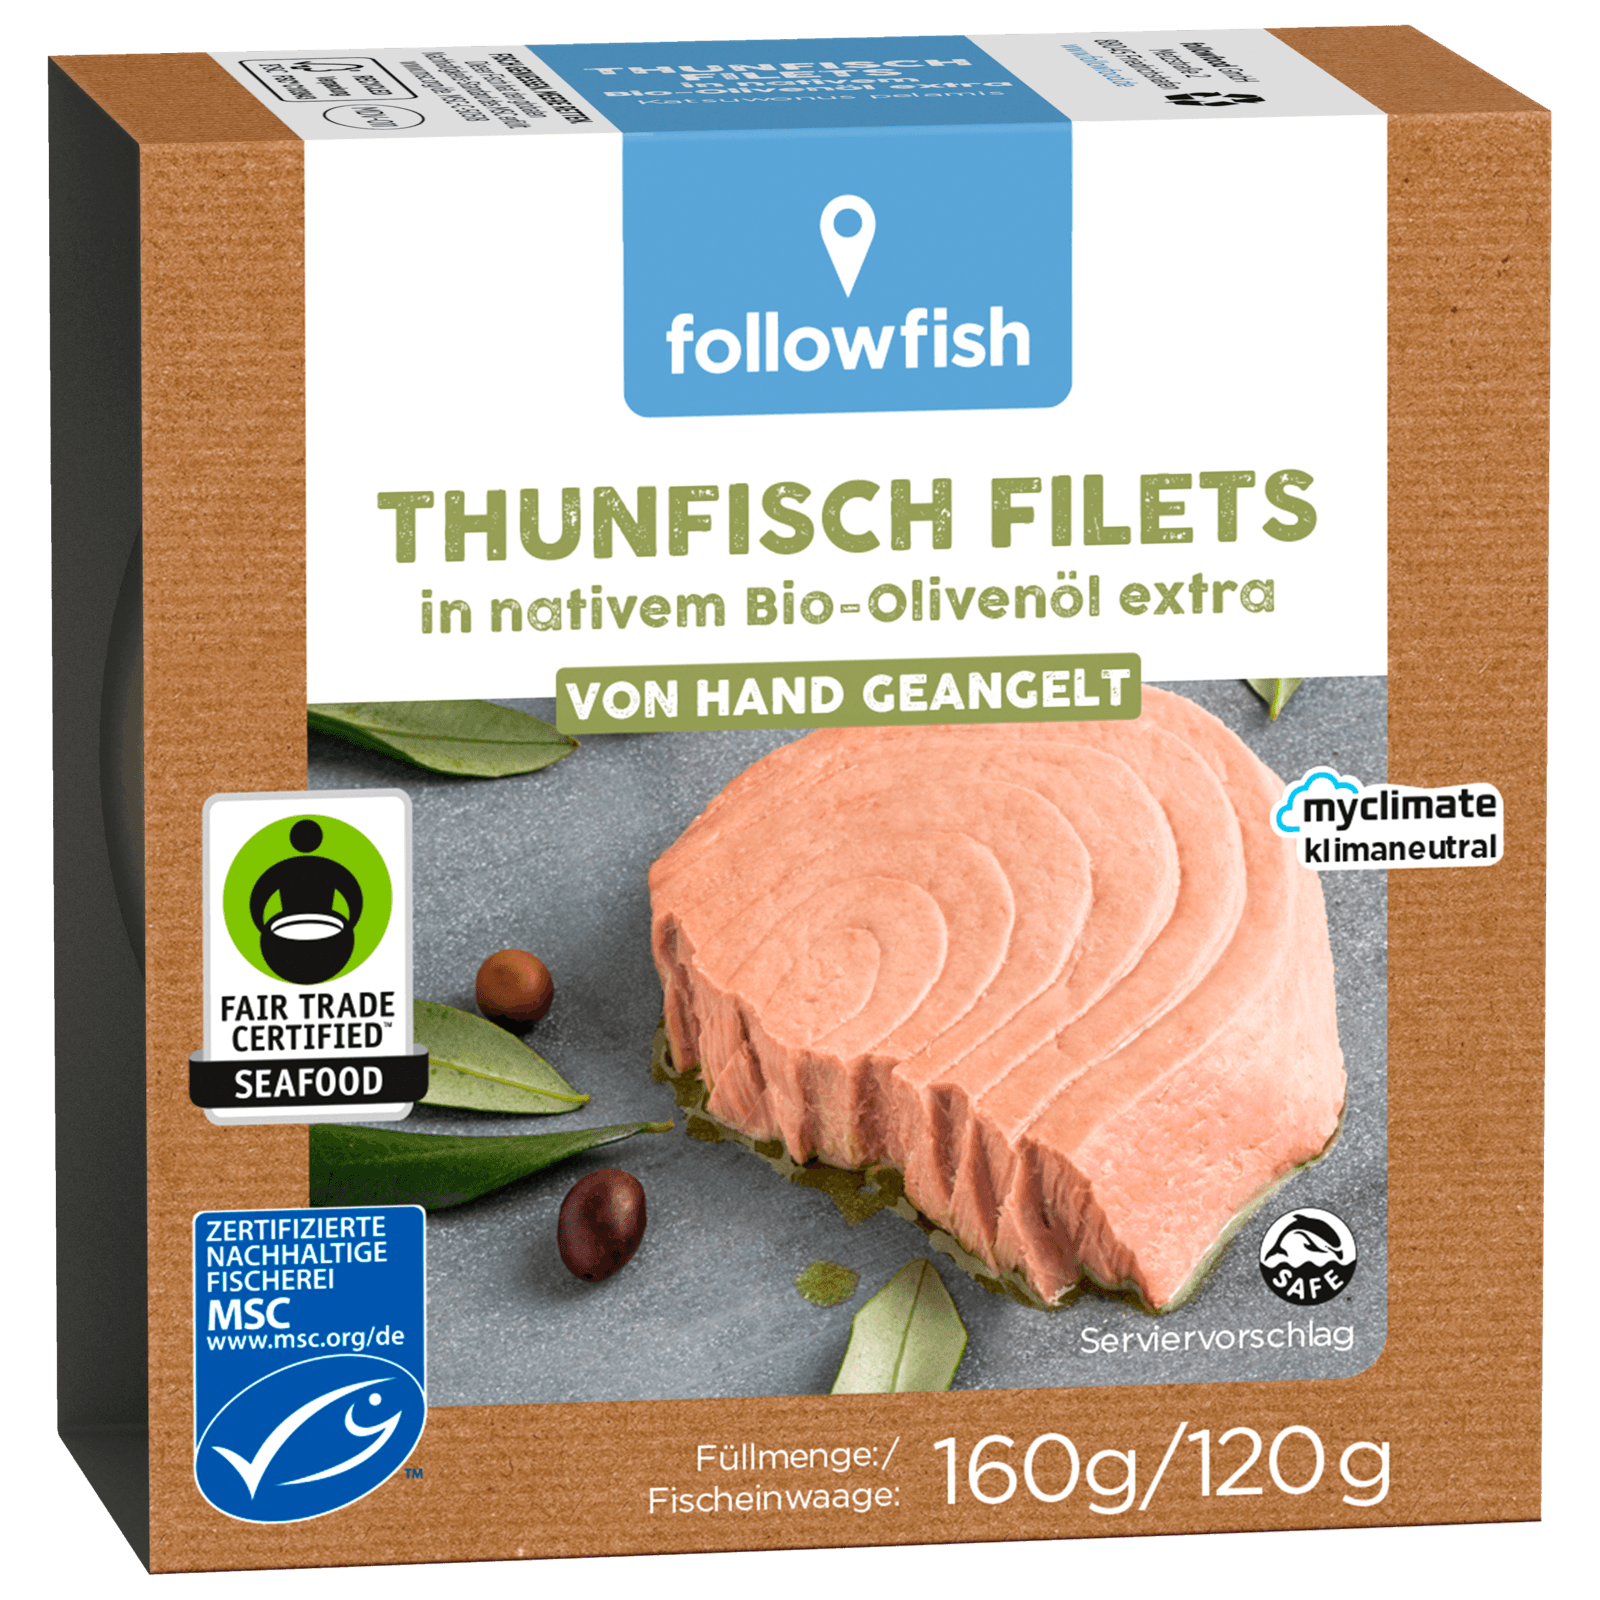 Followfish Thunfisch Filets in nativem Bio-Olivenöl extra 120g